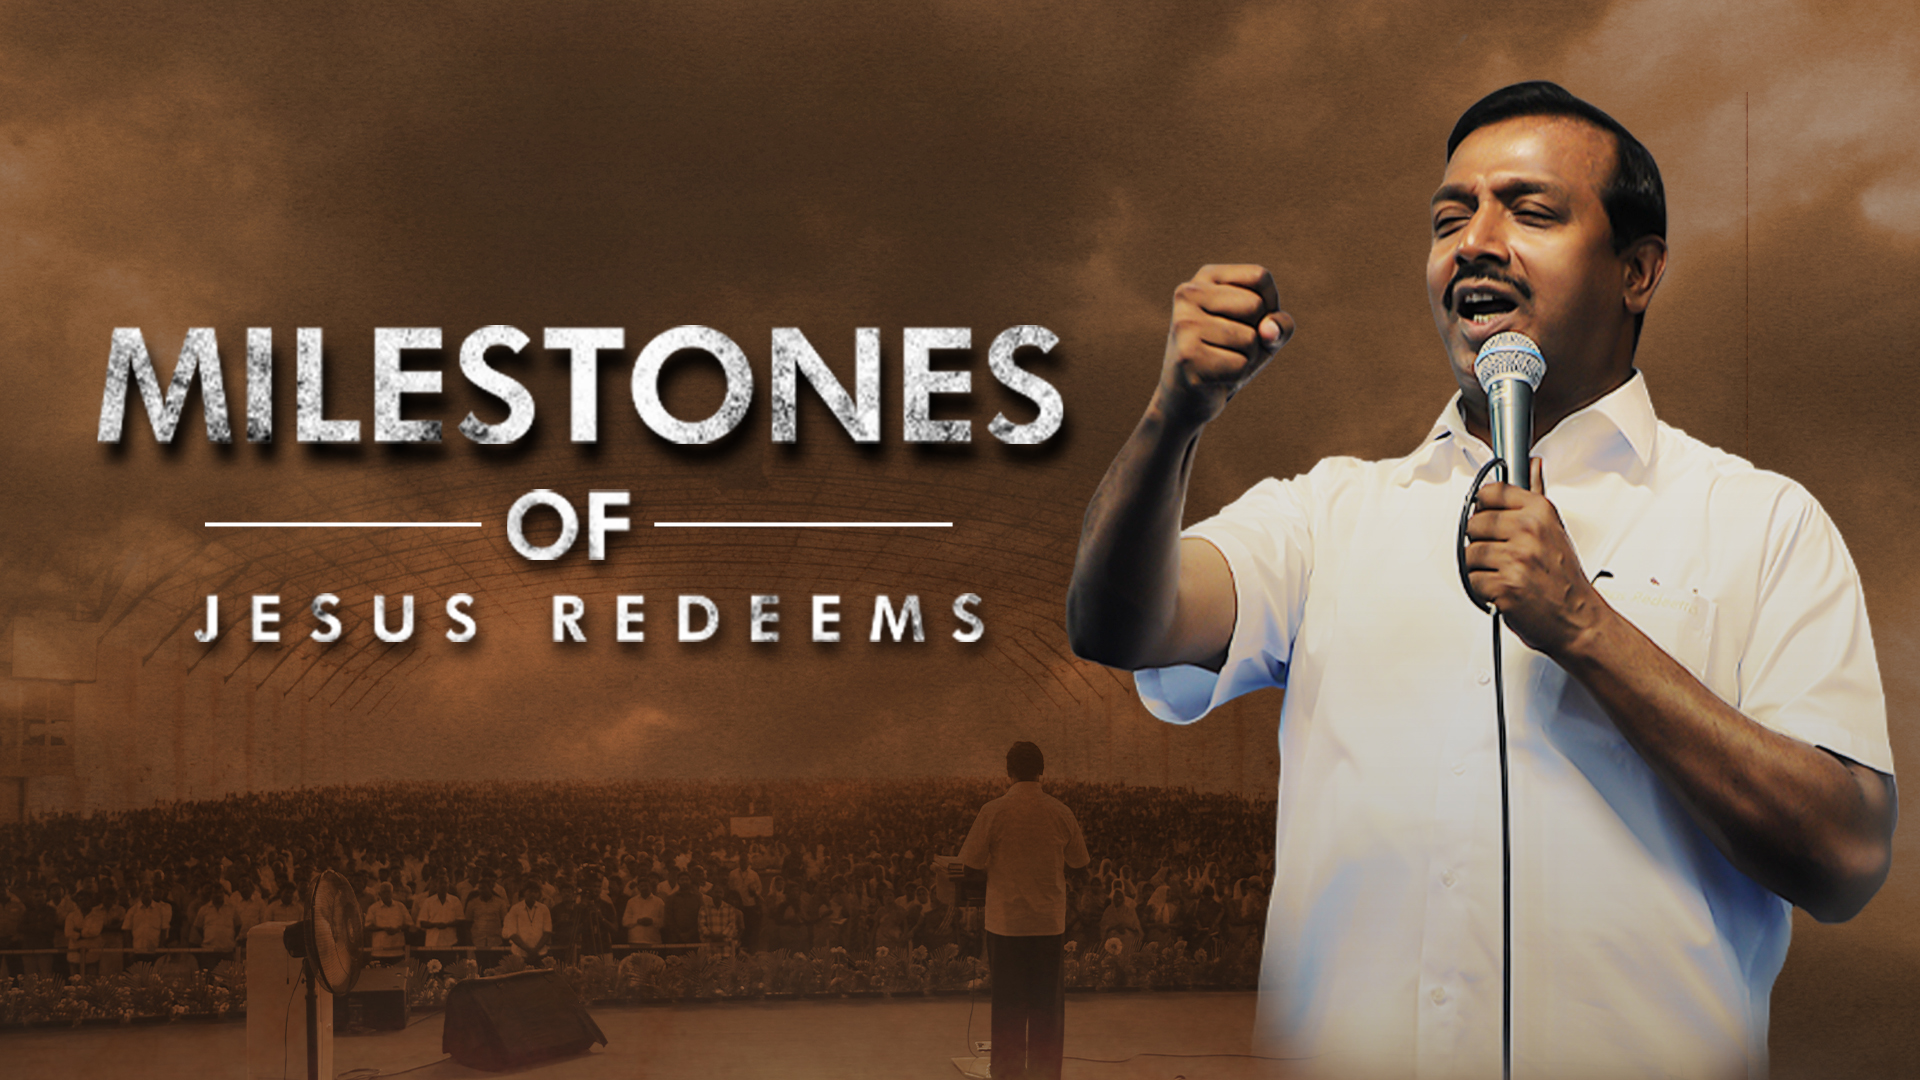 Milestones of Jesus Redeems